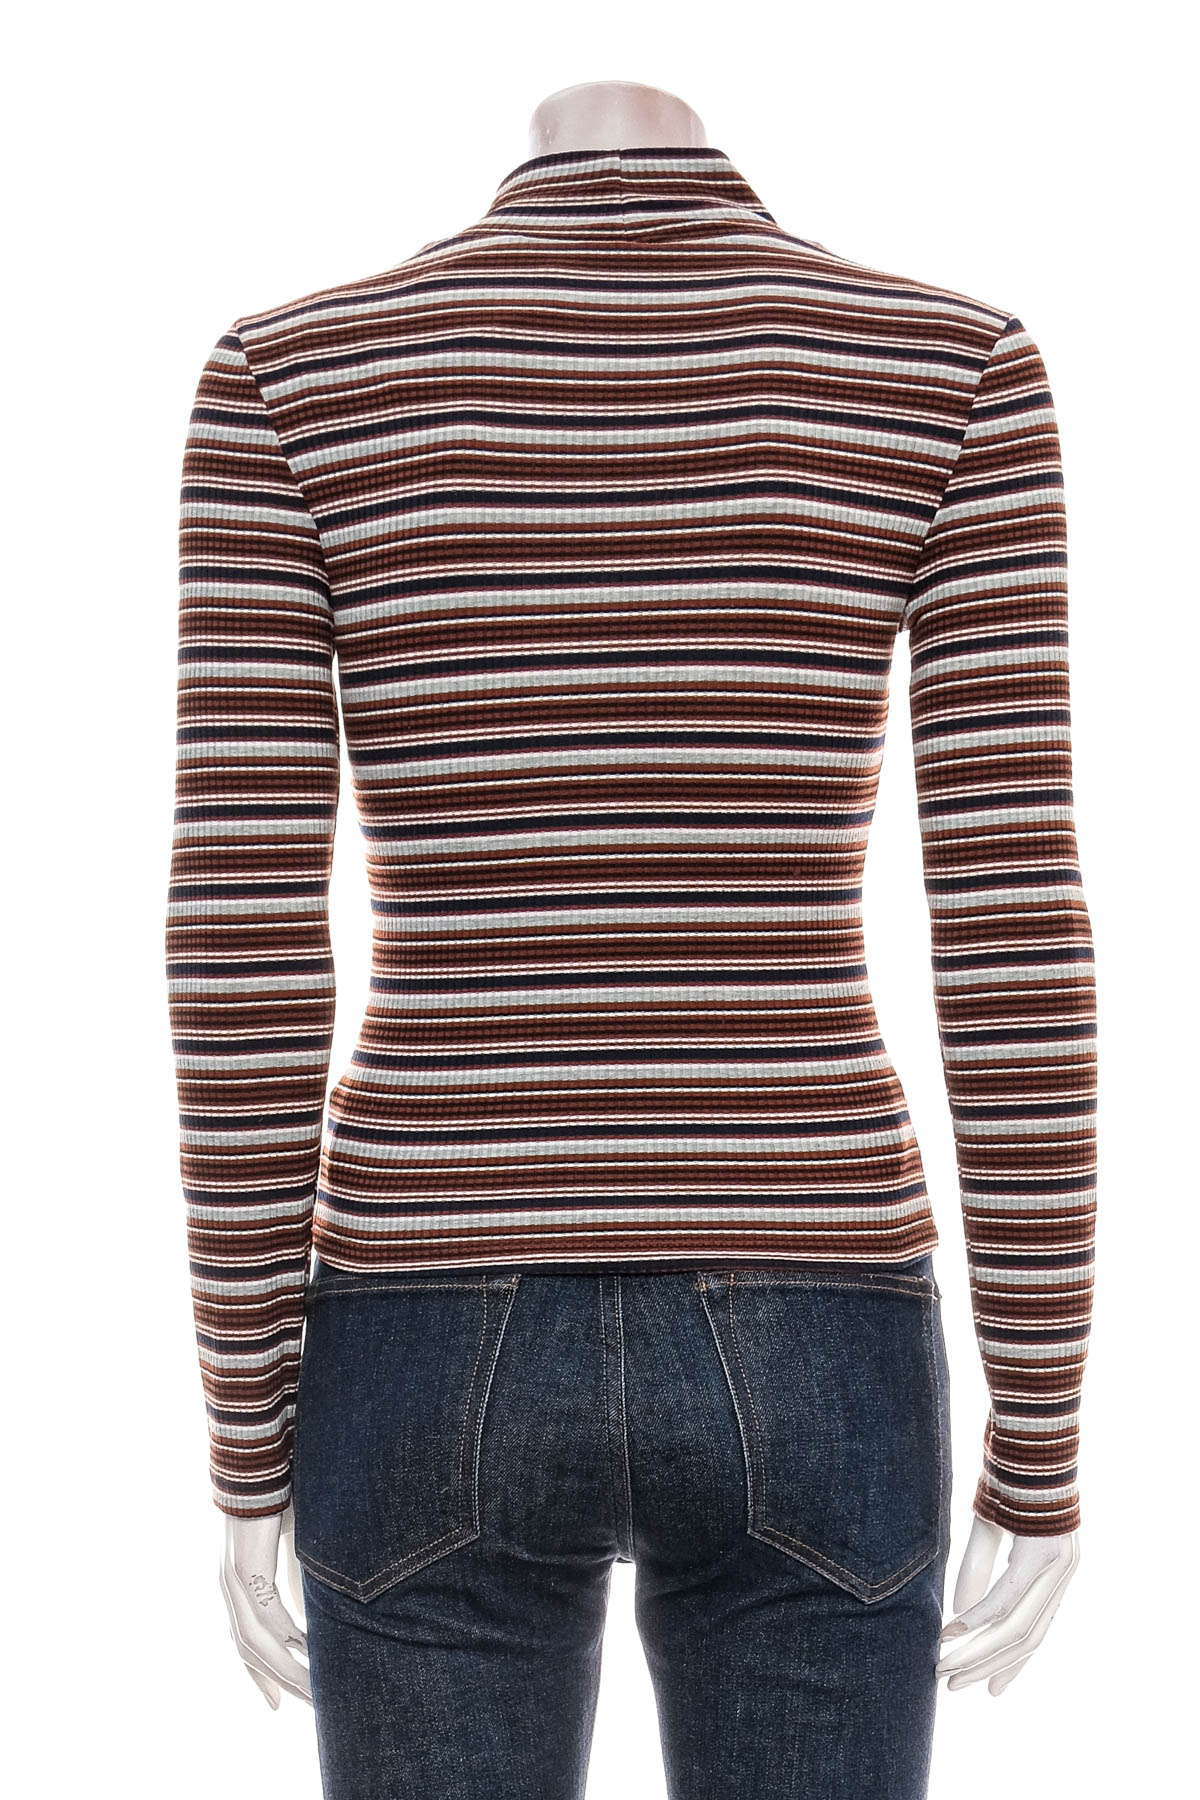 Women's sweater - Ally fashion - 1